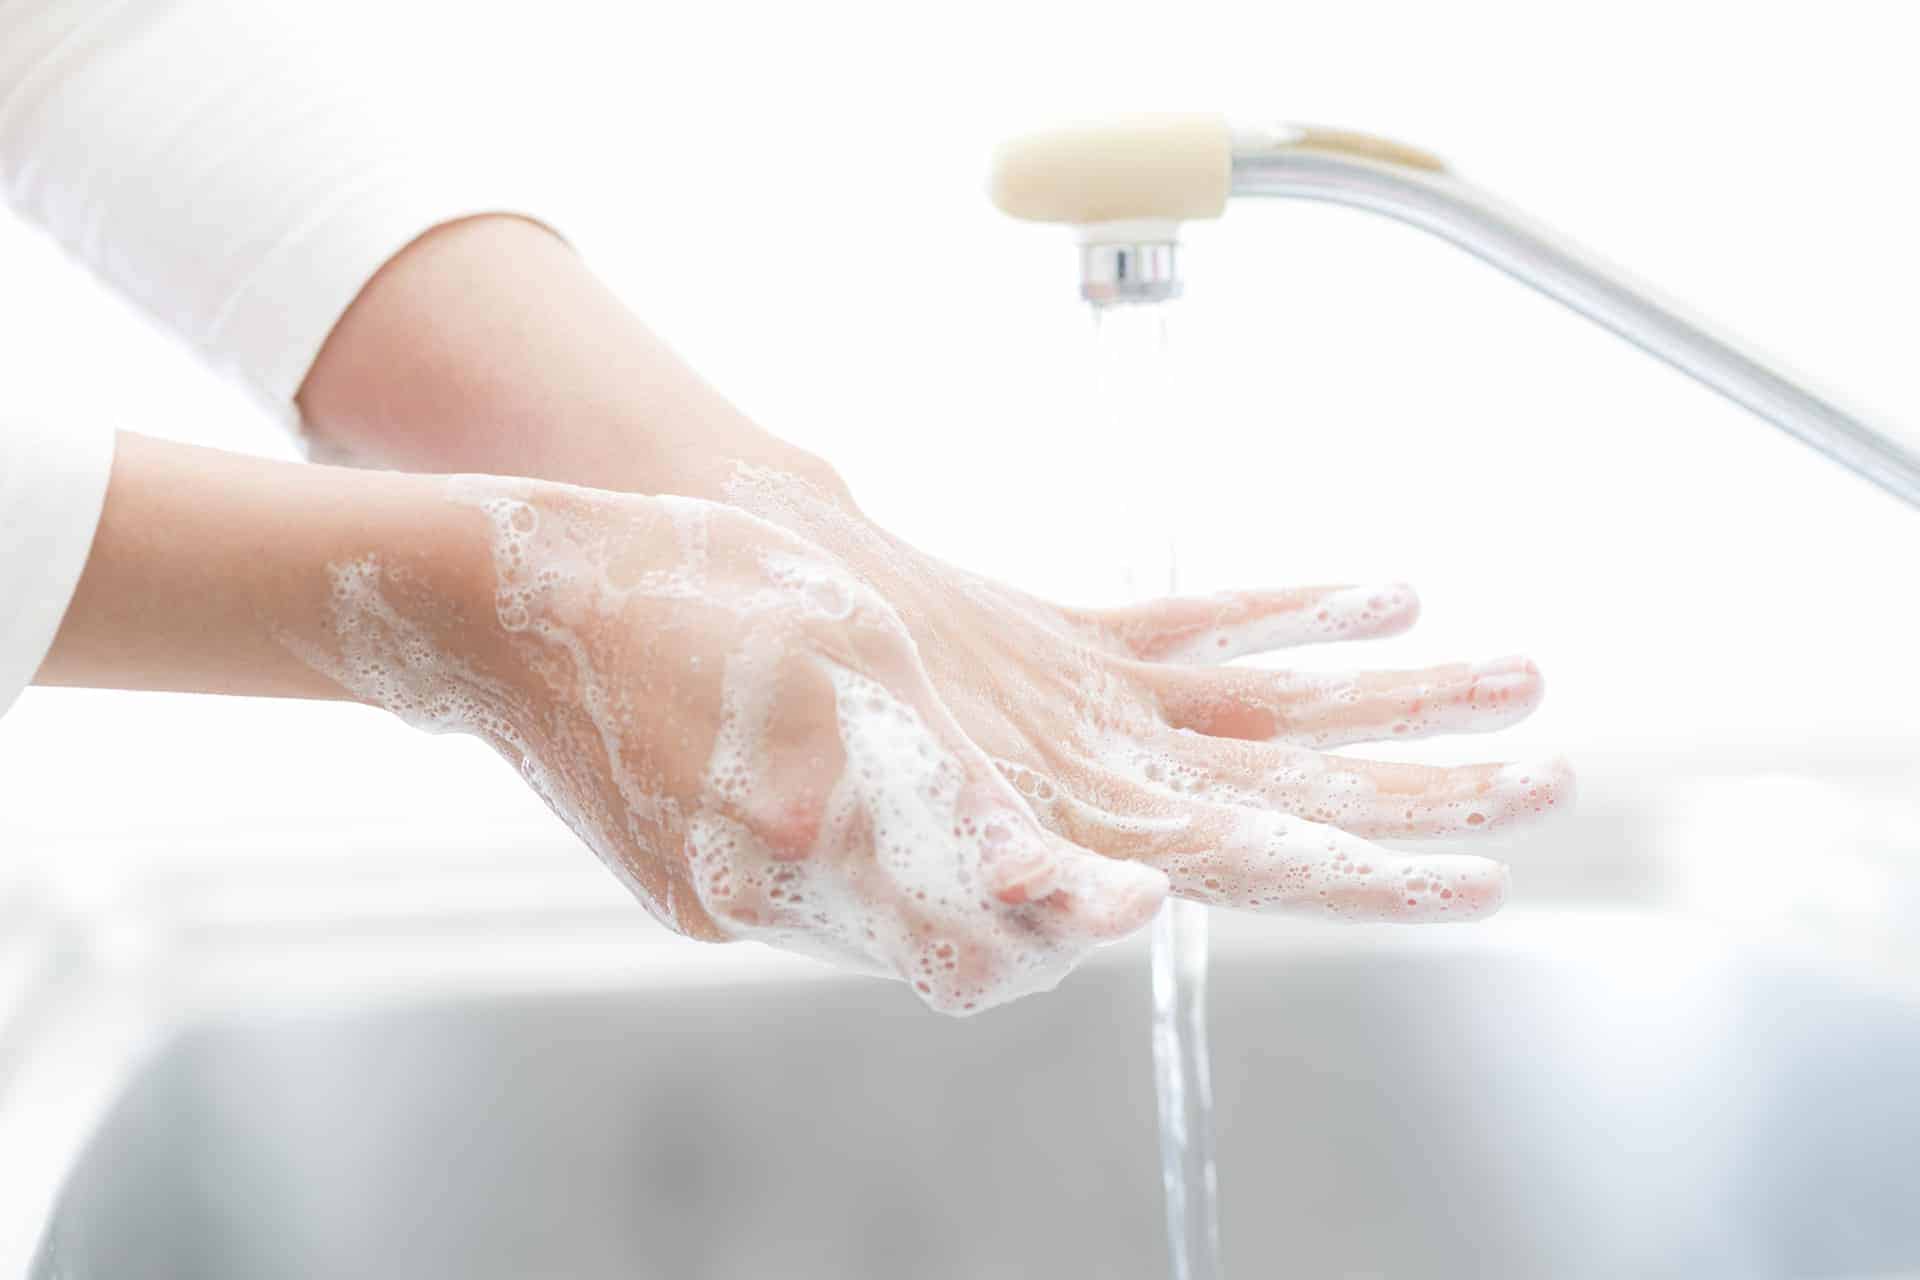 Prawidłowe mycie rąk